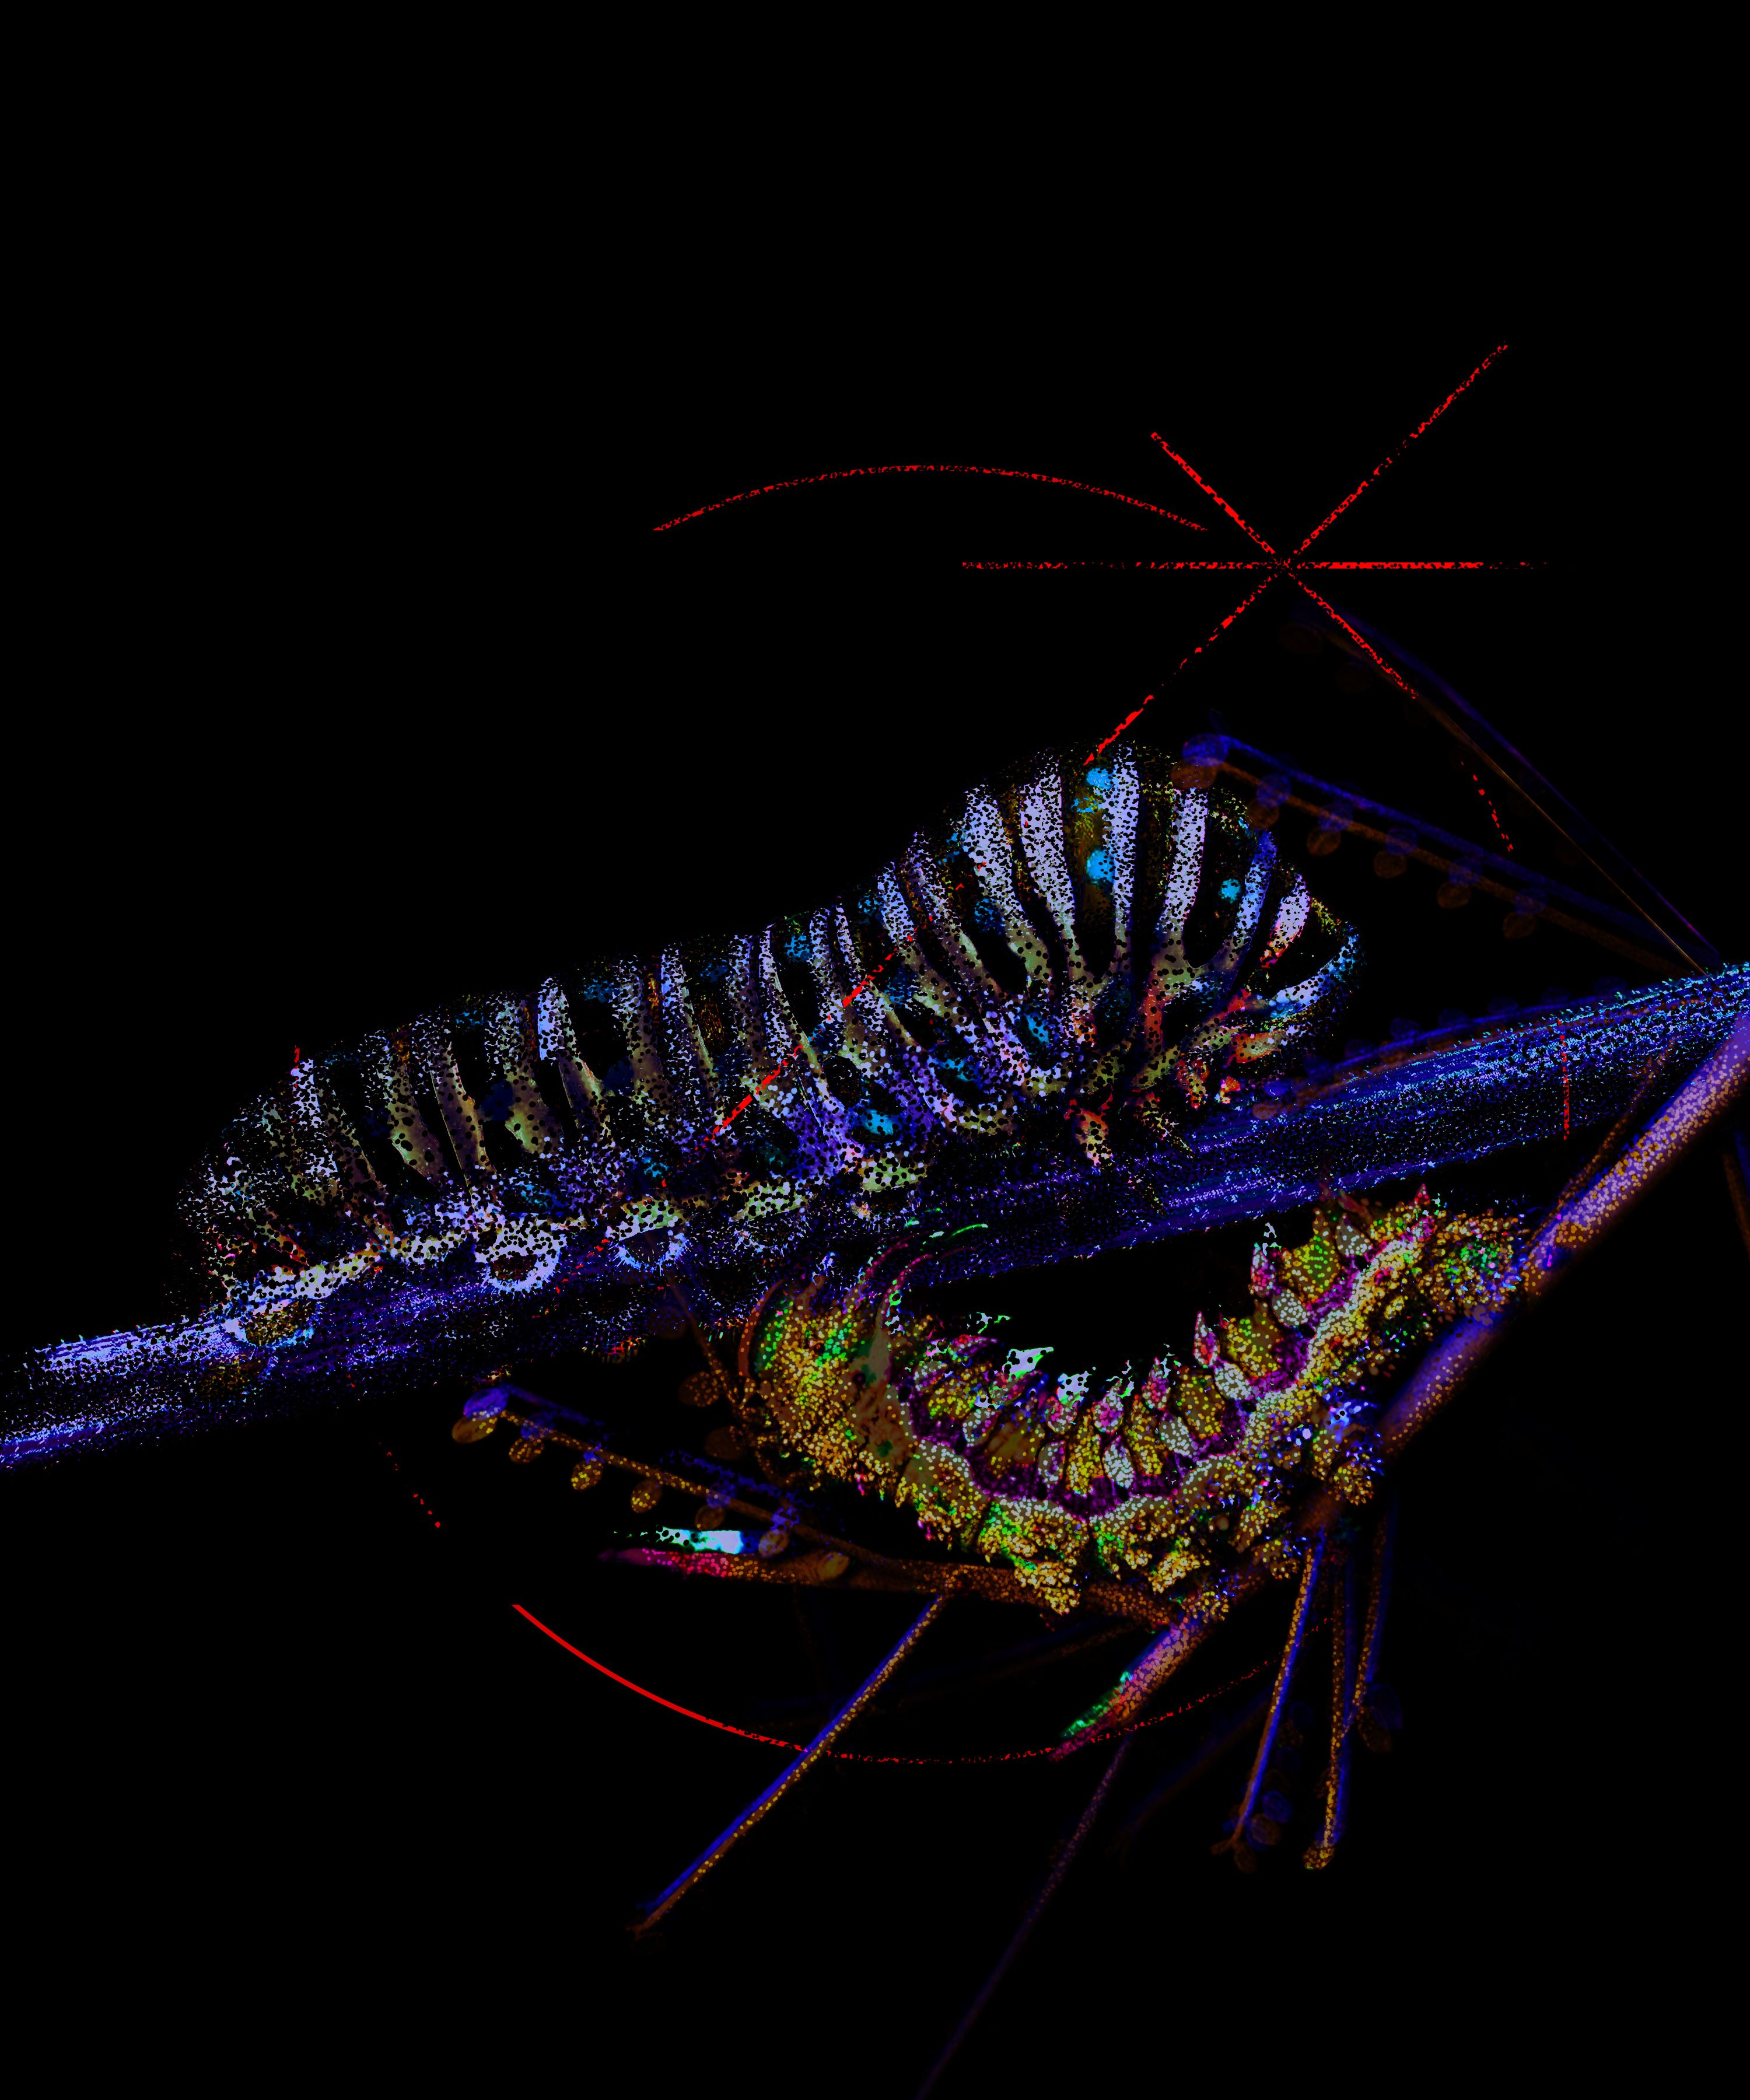 Caterpillar lit in a prism